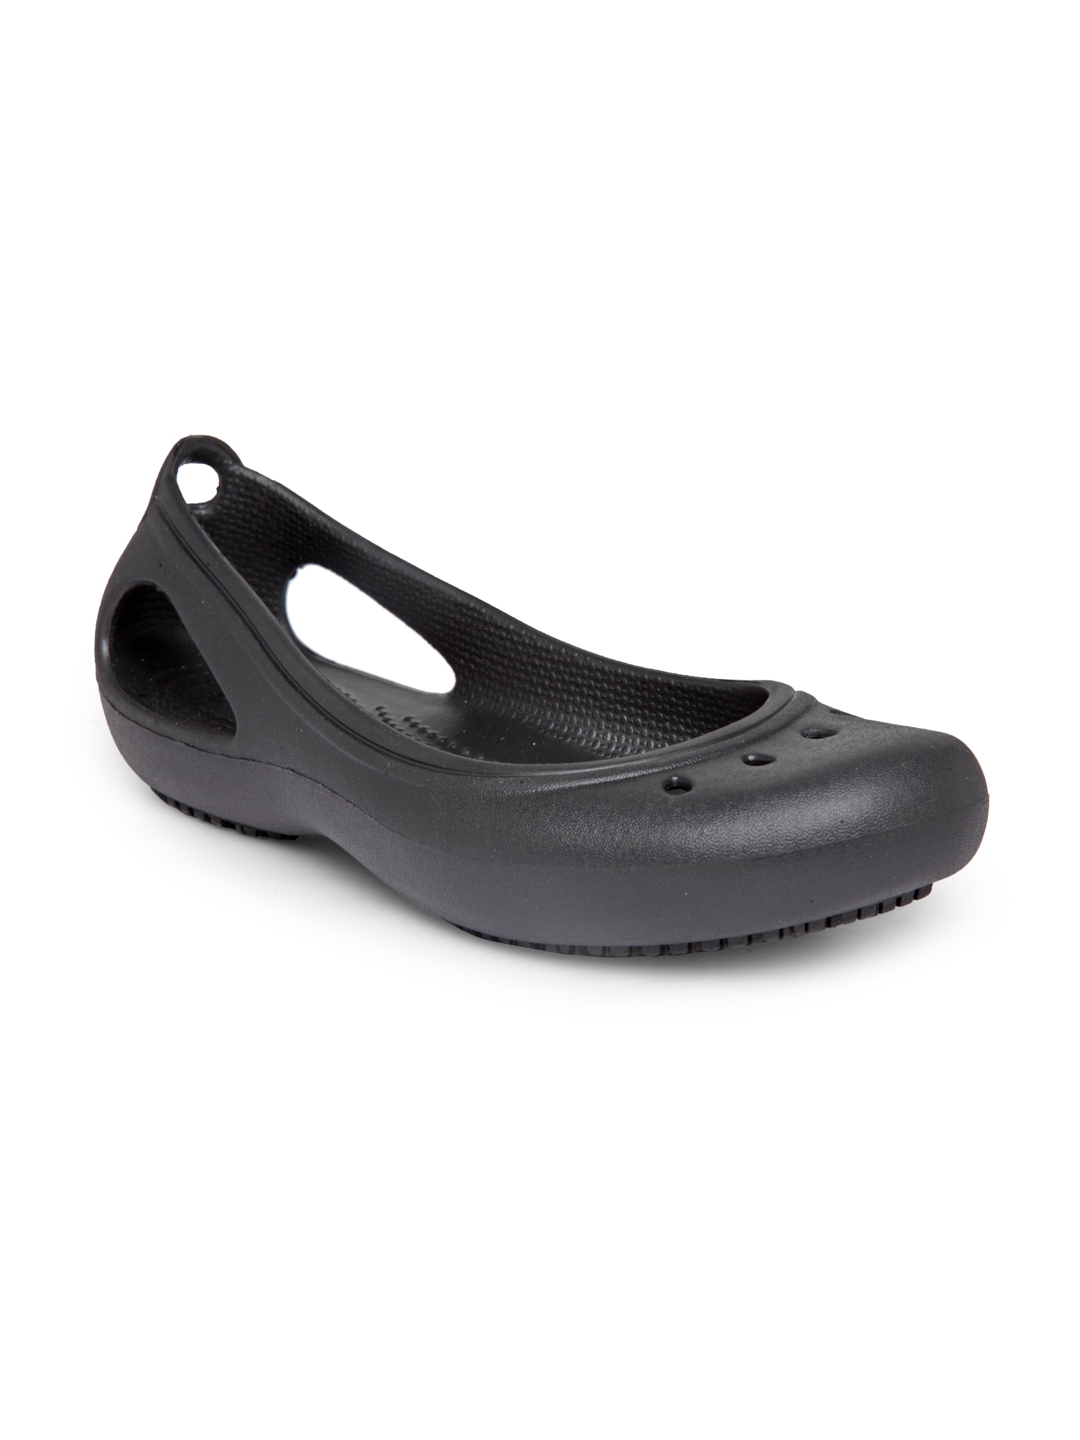 Buy Crocs Kadee Women Black Solid Synthetic Sandals - Flats for Women ...